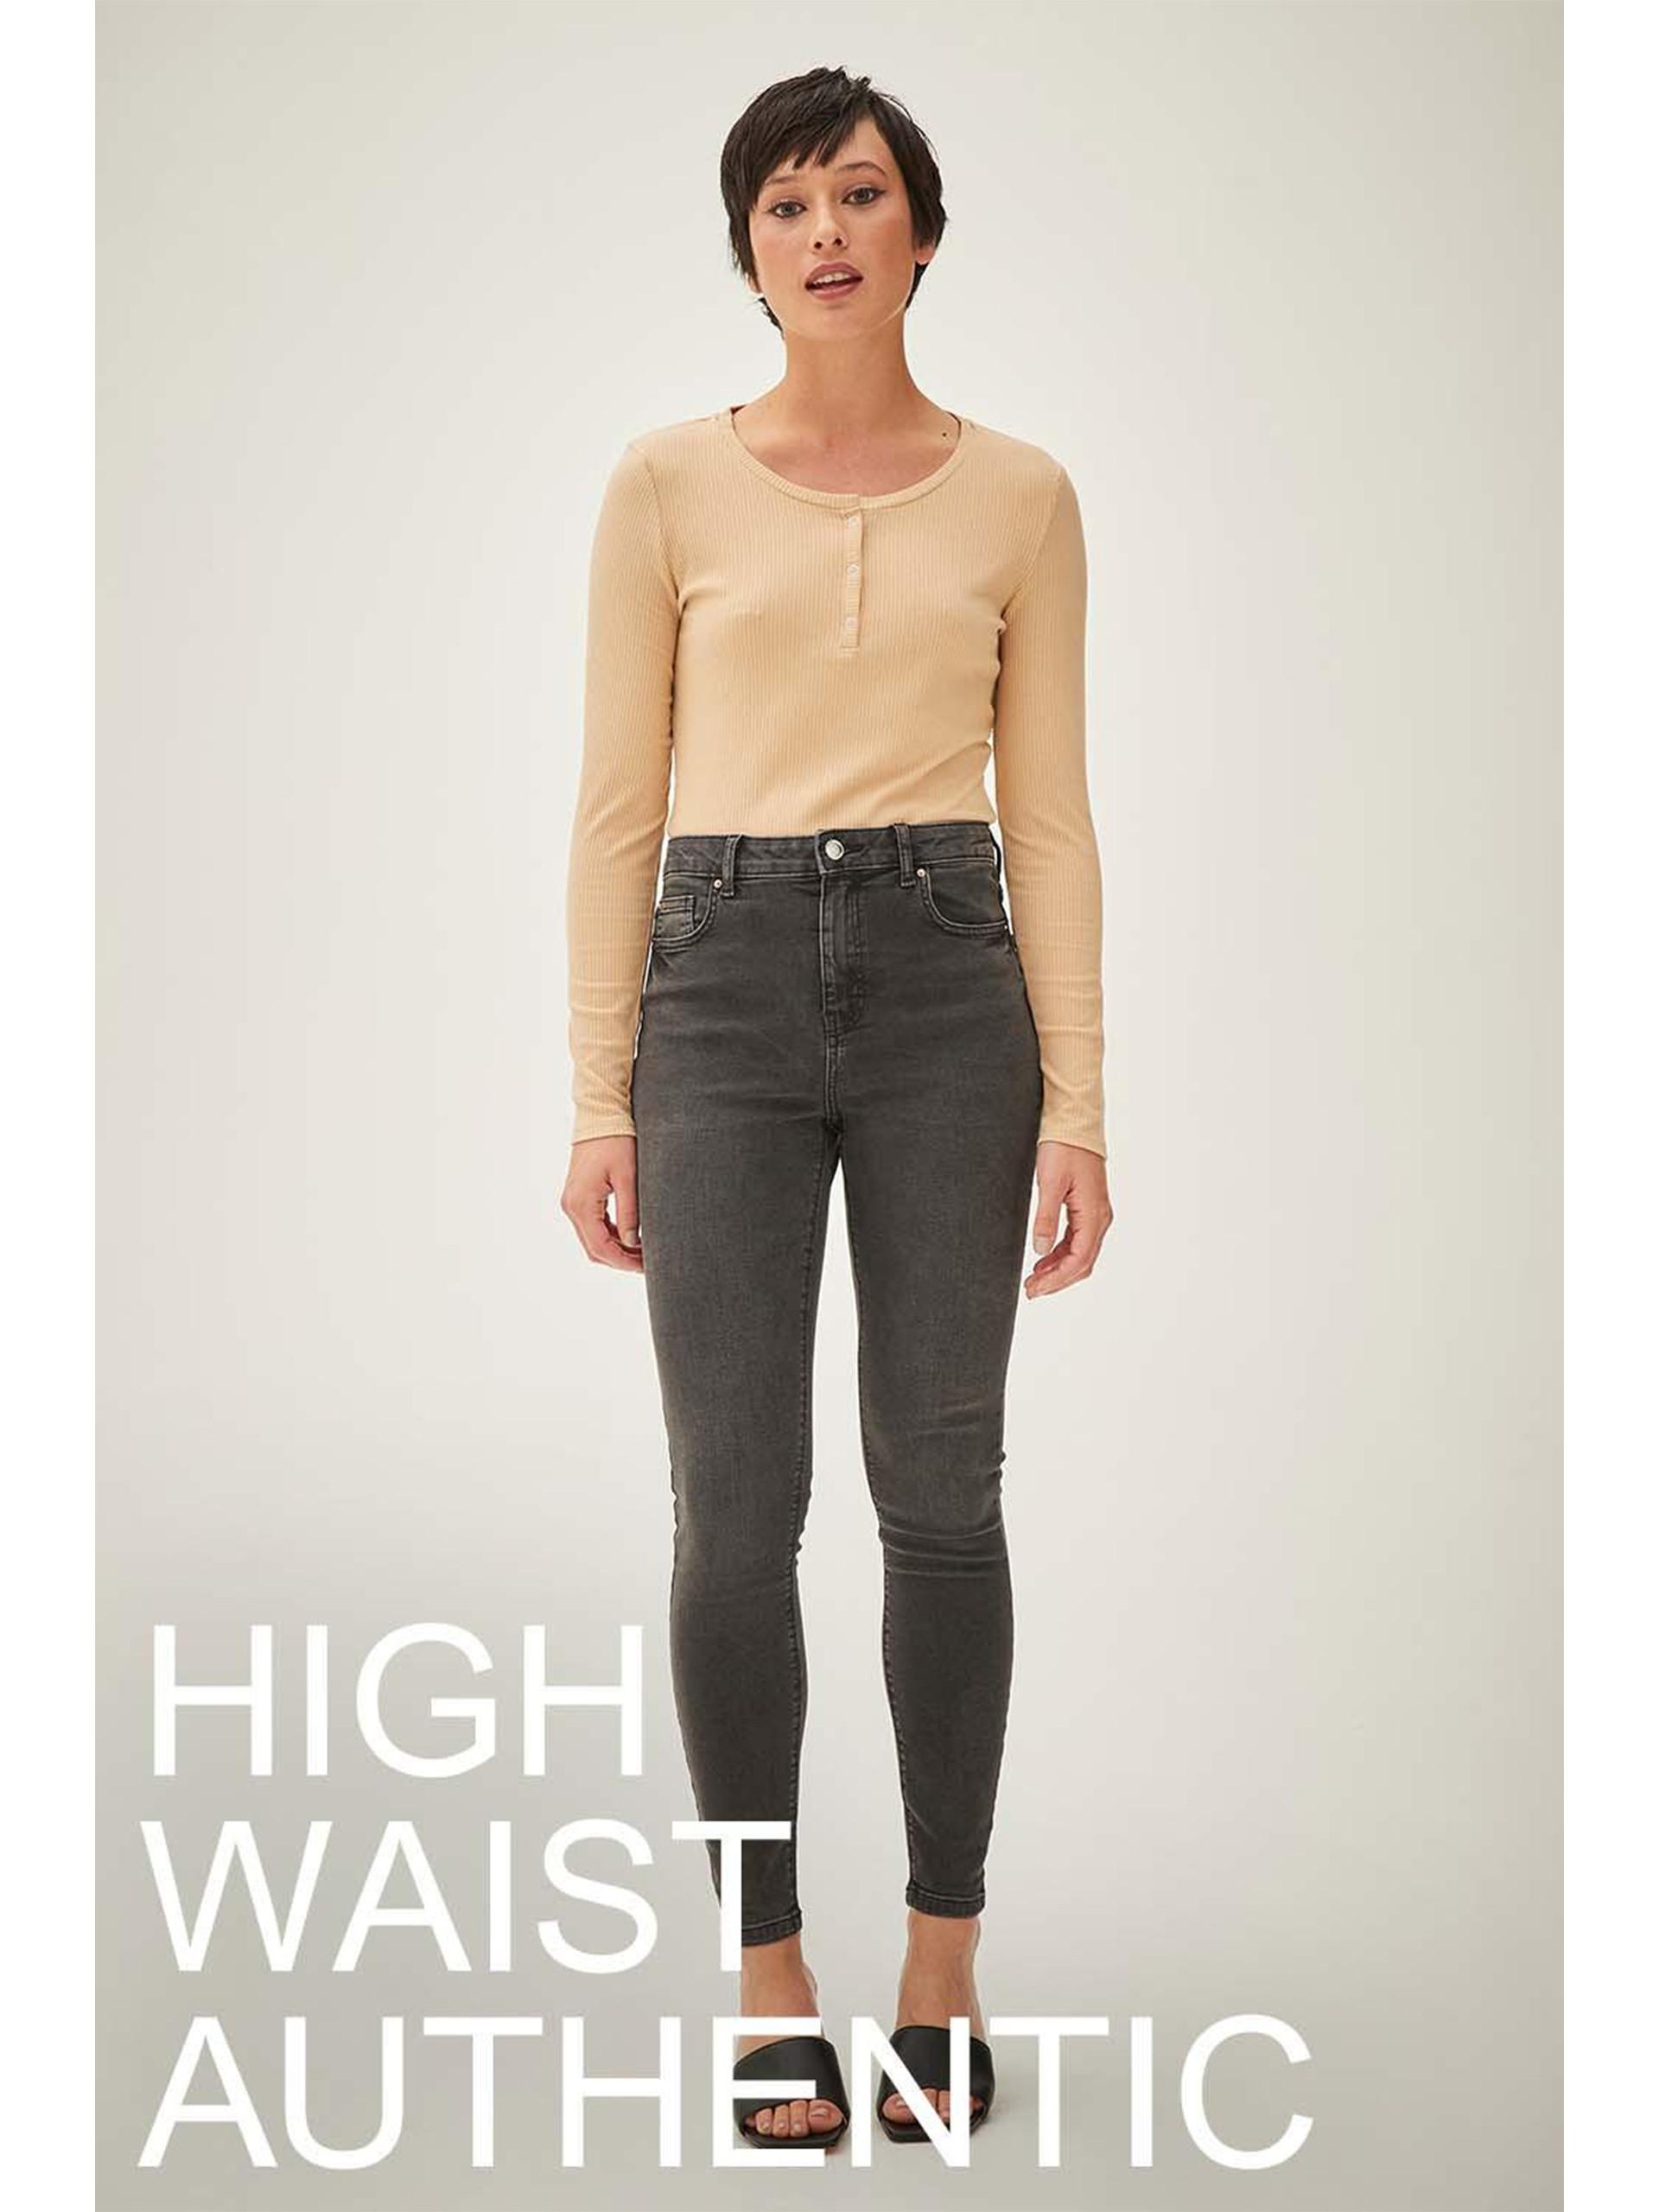 Model wears high waisted grey skinny jeans